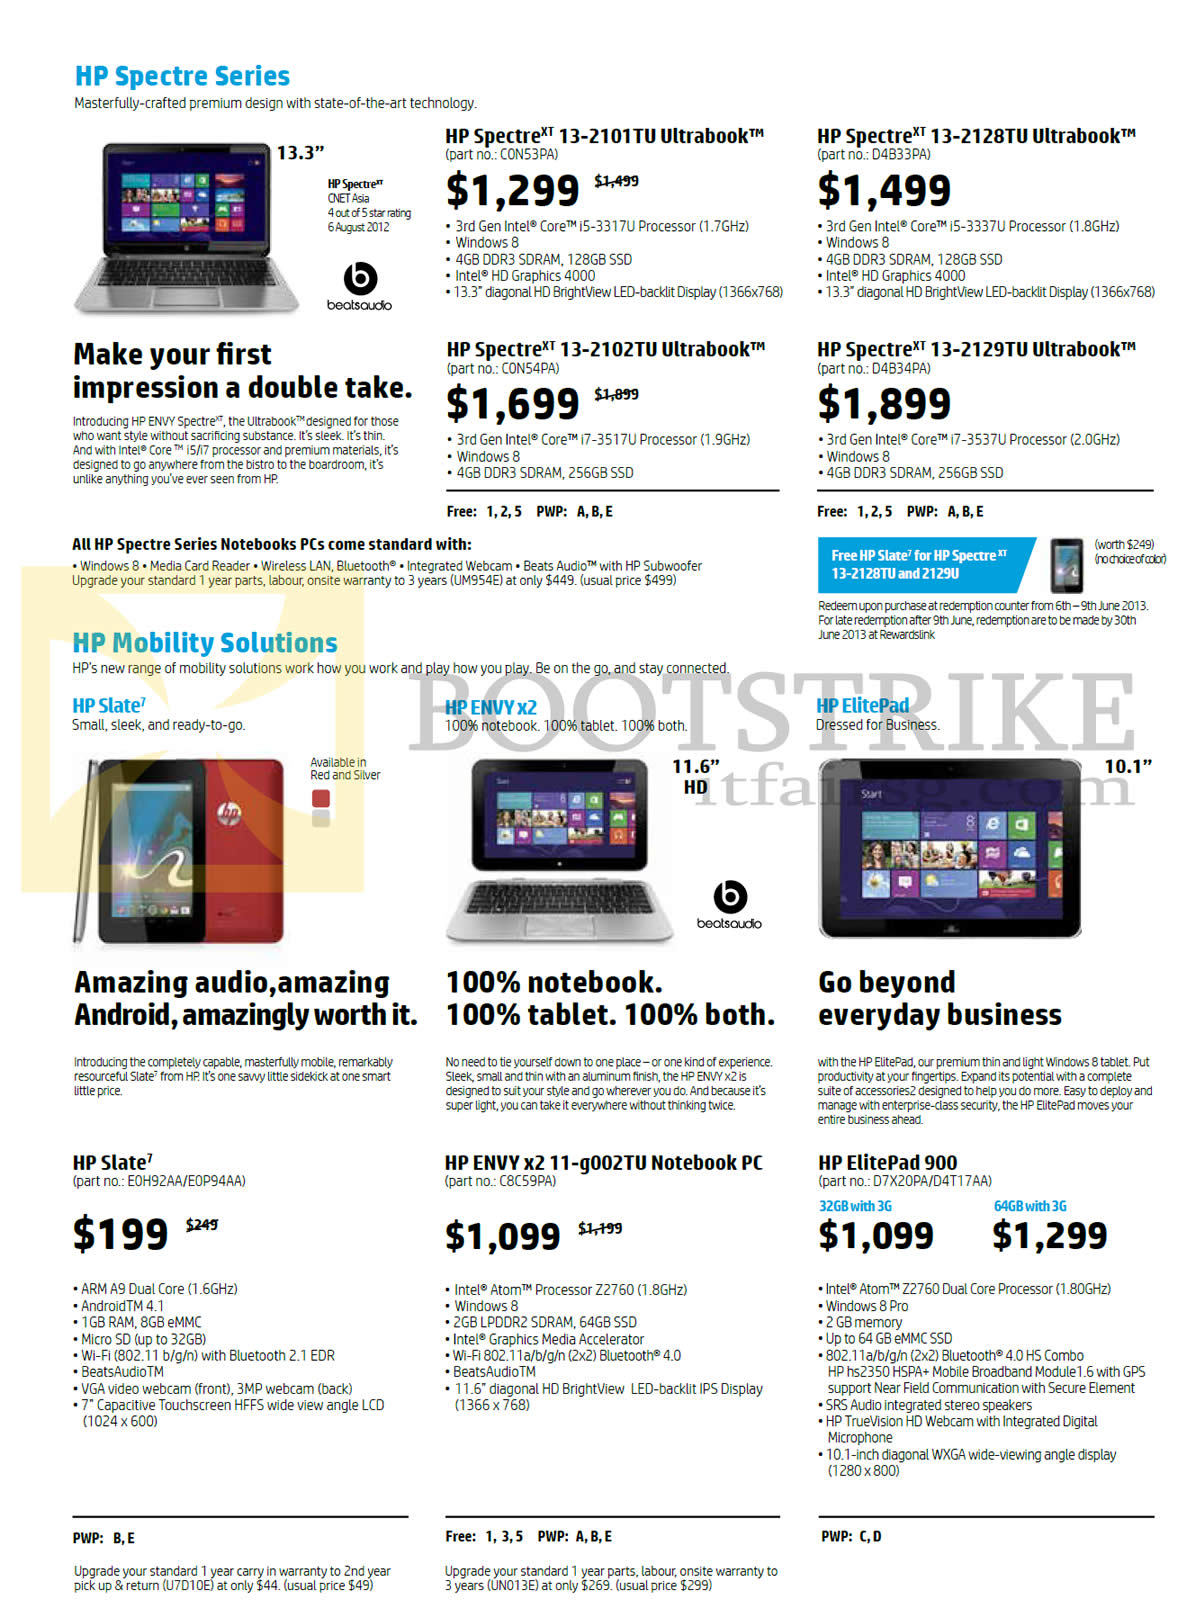 PC SHOW 2013 price list image brochure of HP Notebooks Spectre 13-2102TU, 2128TU, 2102TU, 2129TU, Slate 7, Envy X 211-g002 TU, ElitePad 900